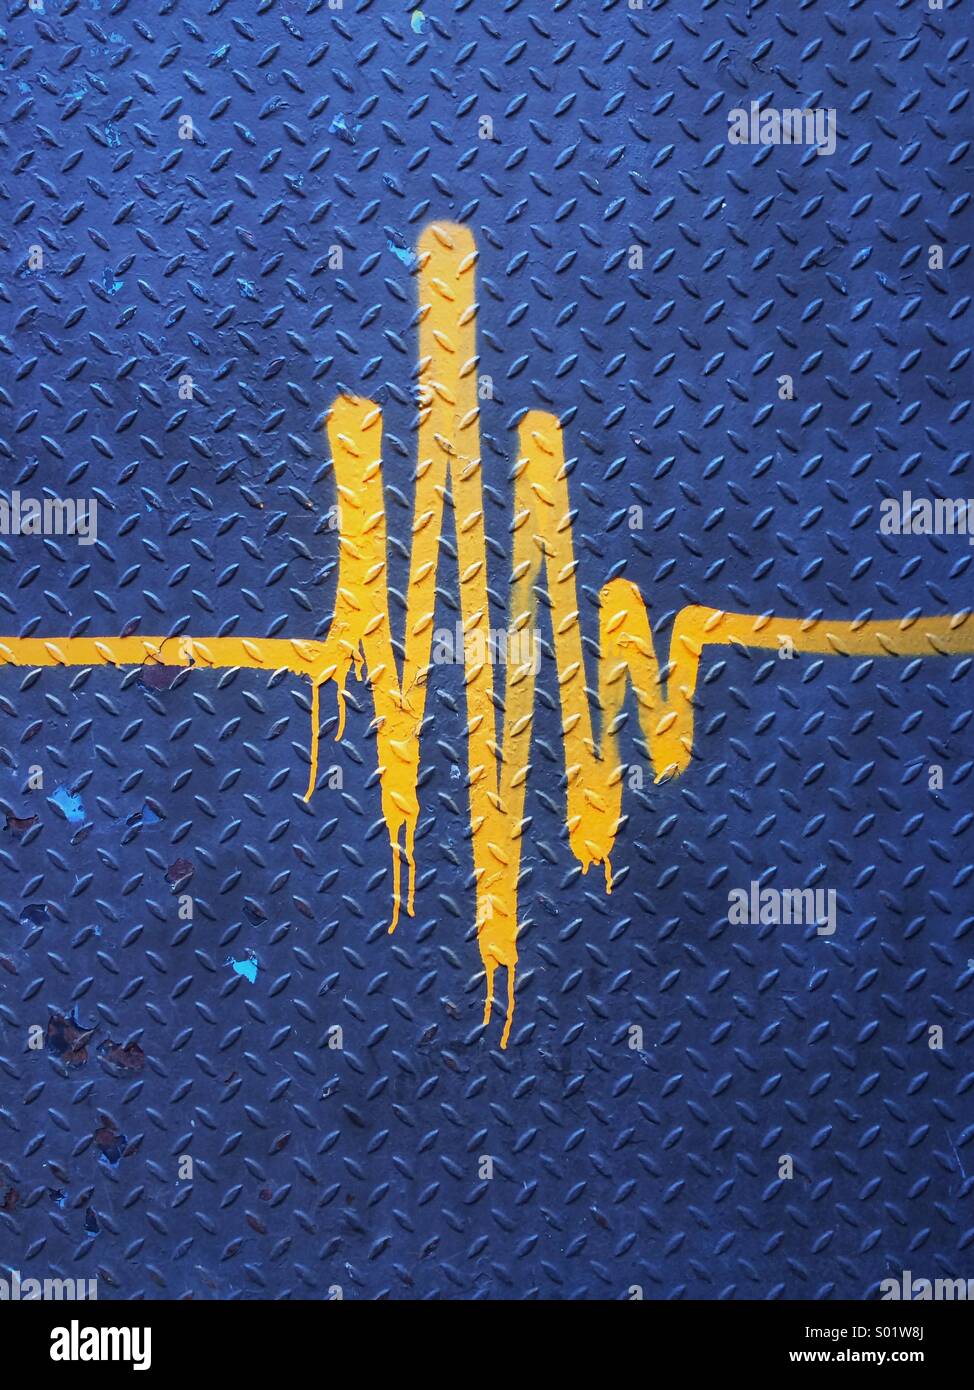 EKG street art. Graffiti of electrocardiography waves (aka ECG) on blue metal surface in Manhattan, New York City, USA. Stock Photo